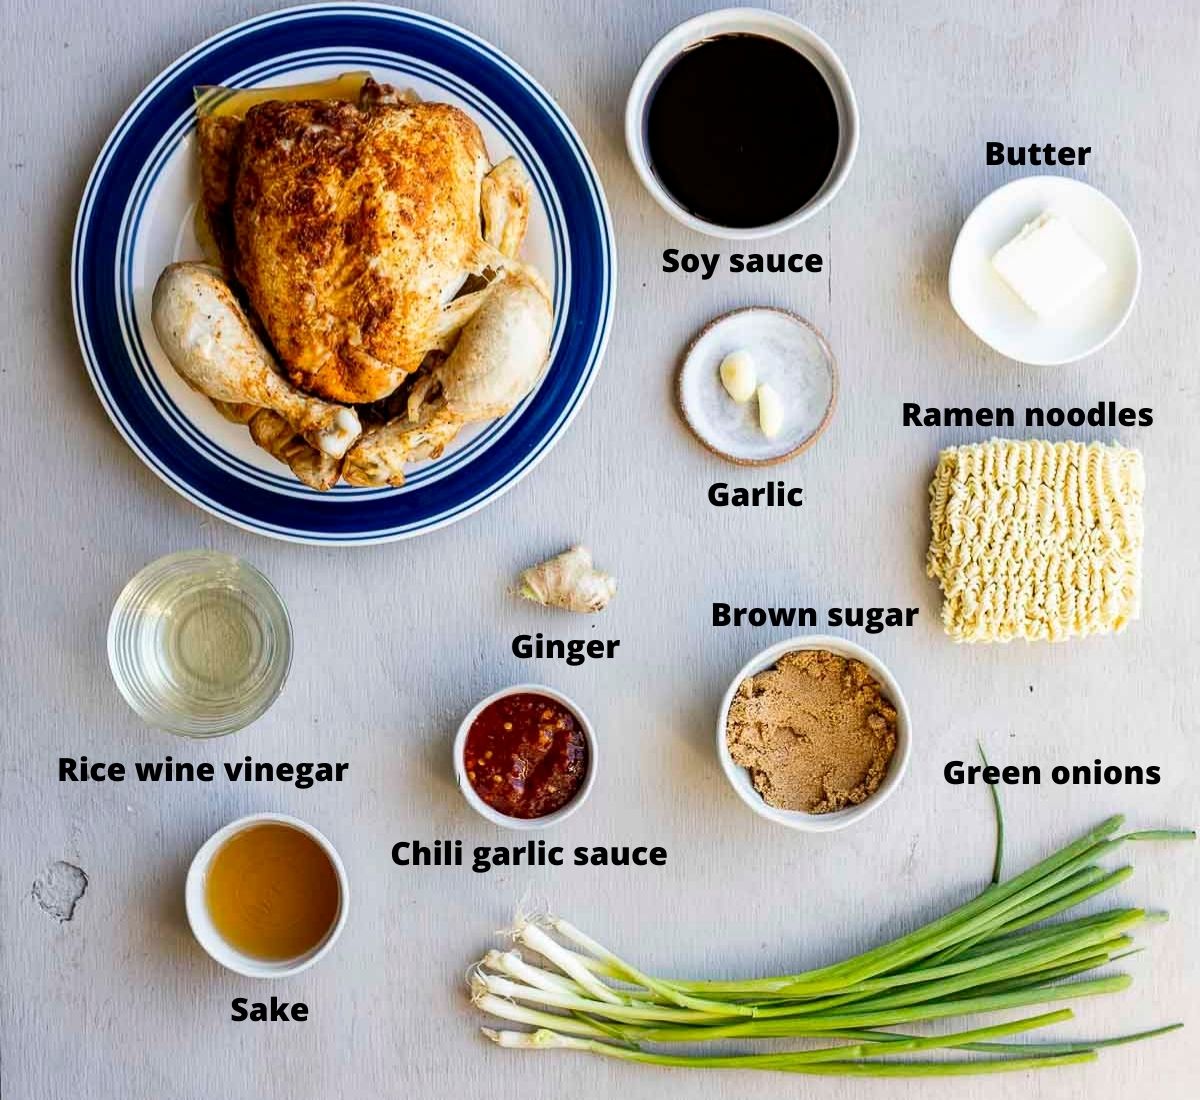 Chicken Ramen Seasoning Mix